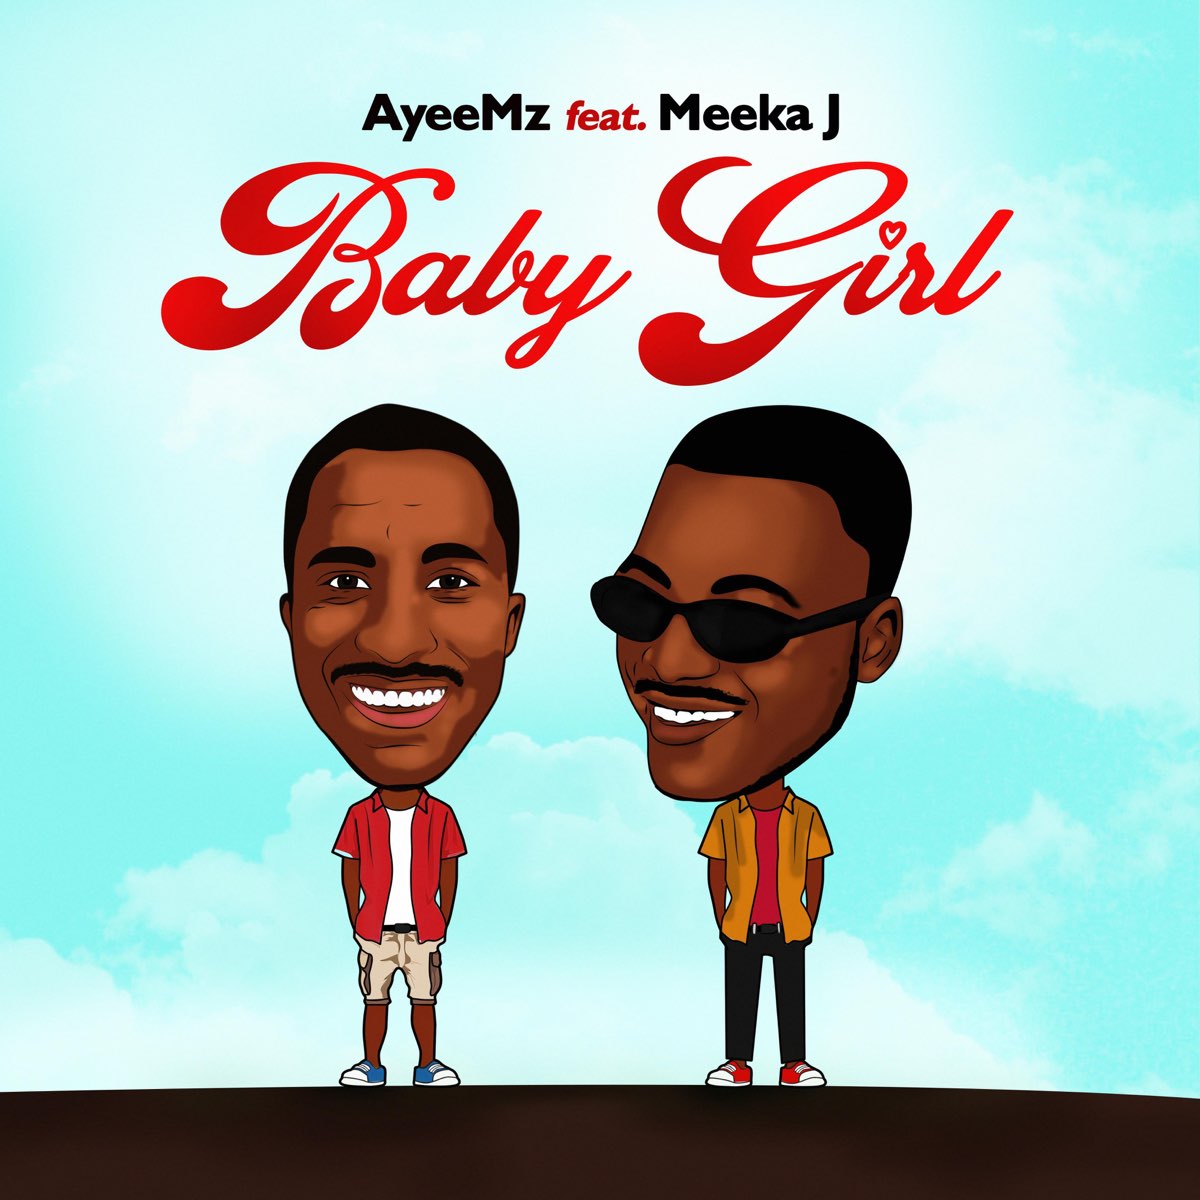 Baby Girl (feat. Meeka j) - Single - Album by AyeeMz - Apple Music